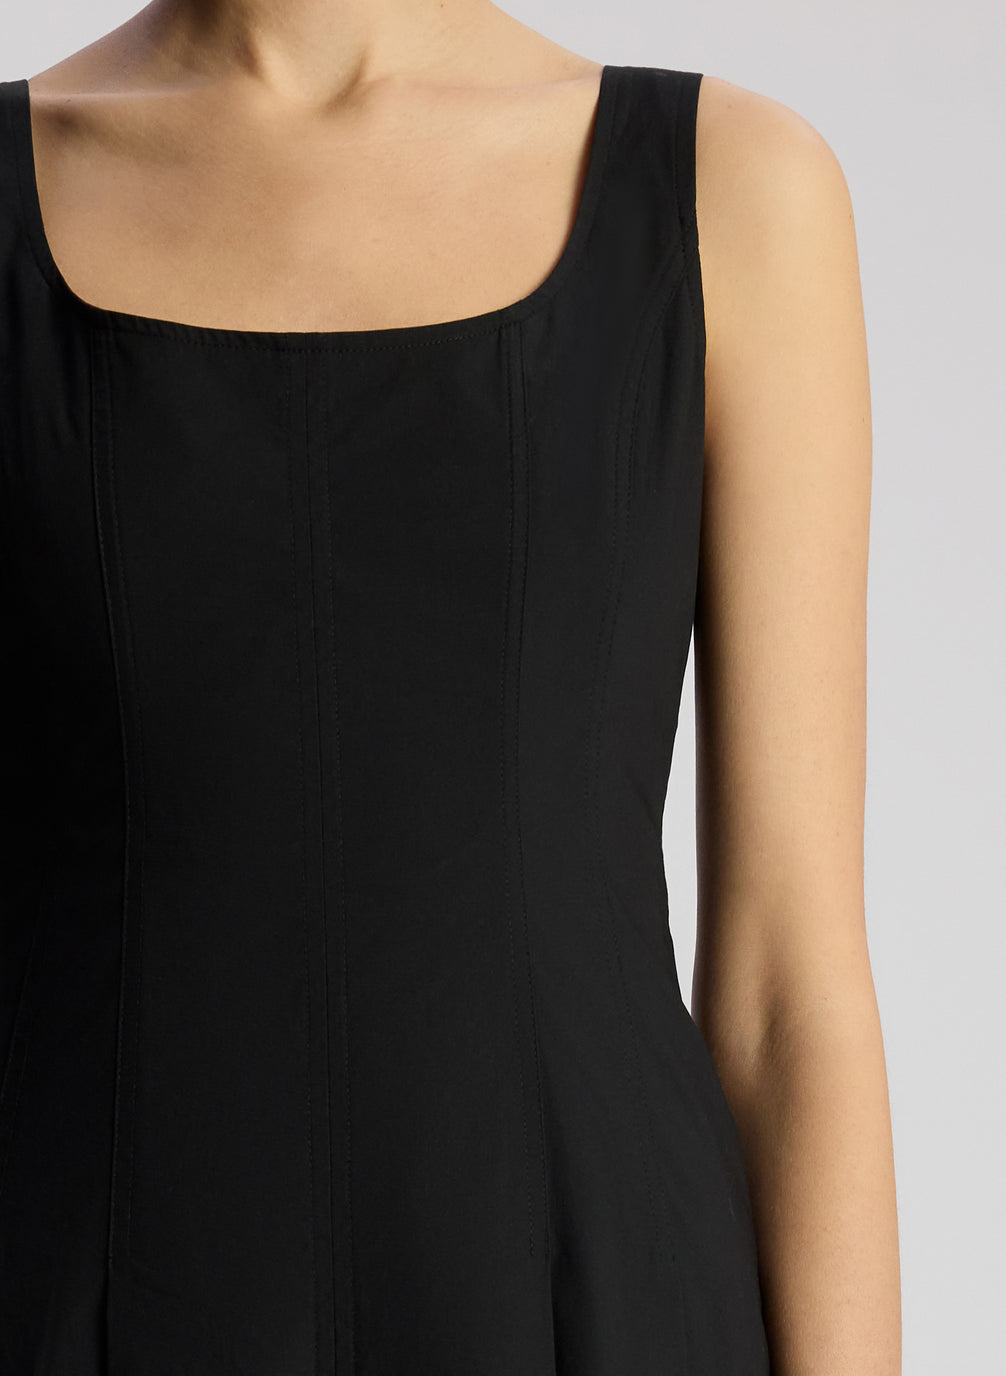 detail  view of woman wearing black sleeveless midi dress